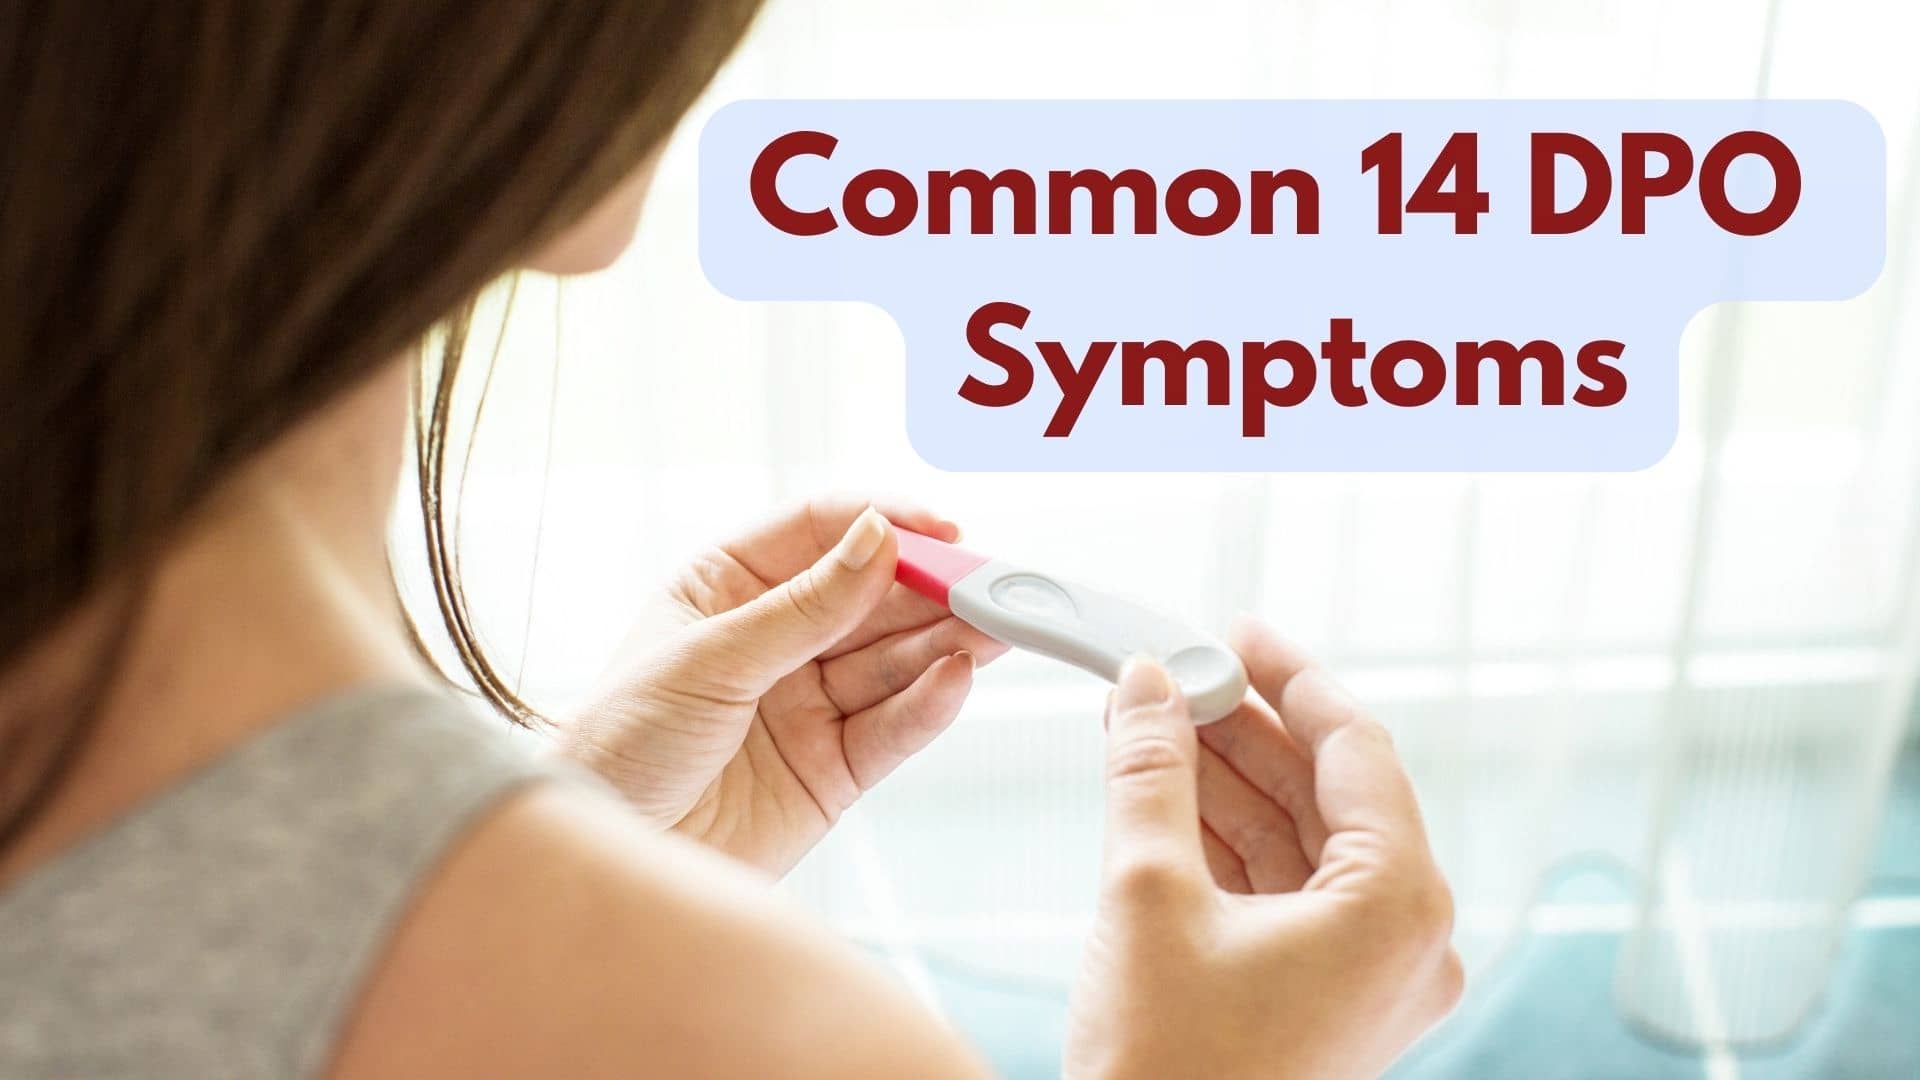 What Are The Common 14 DPO Symptoms?